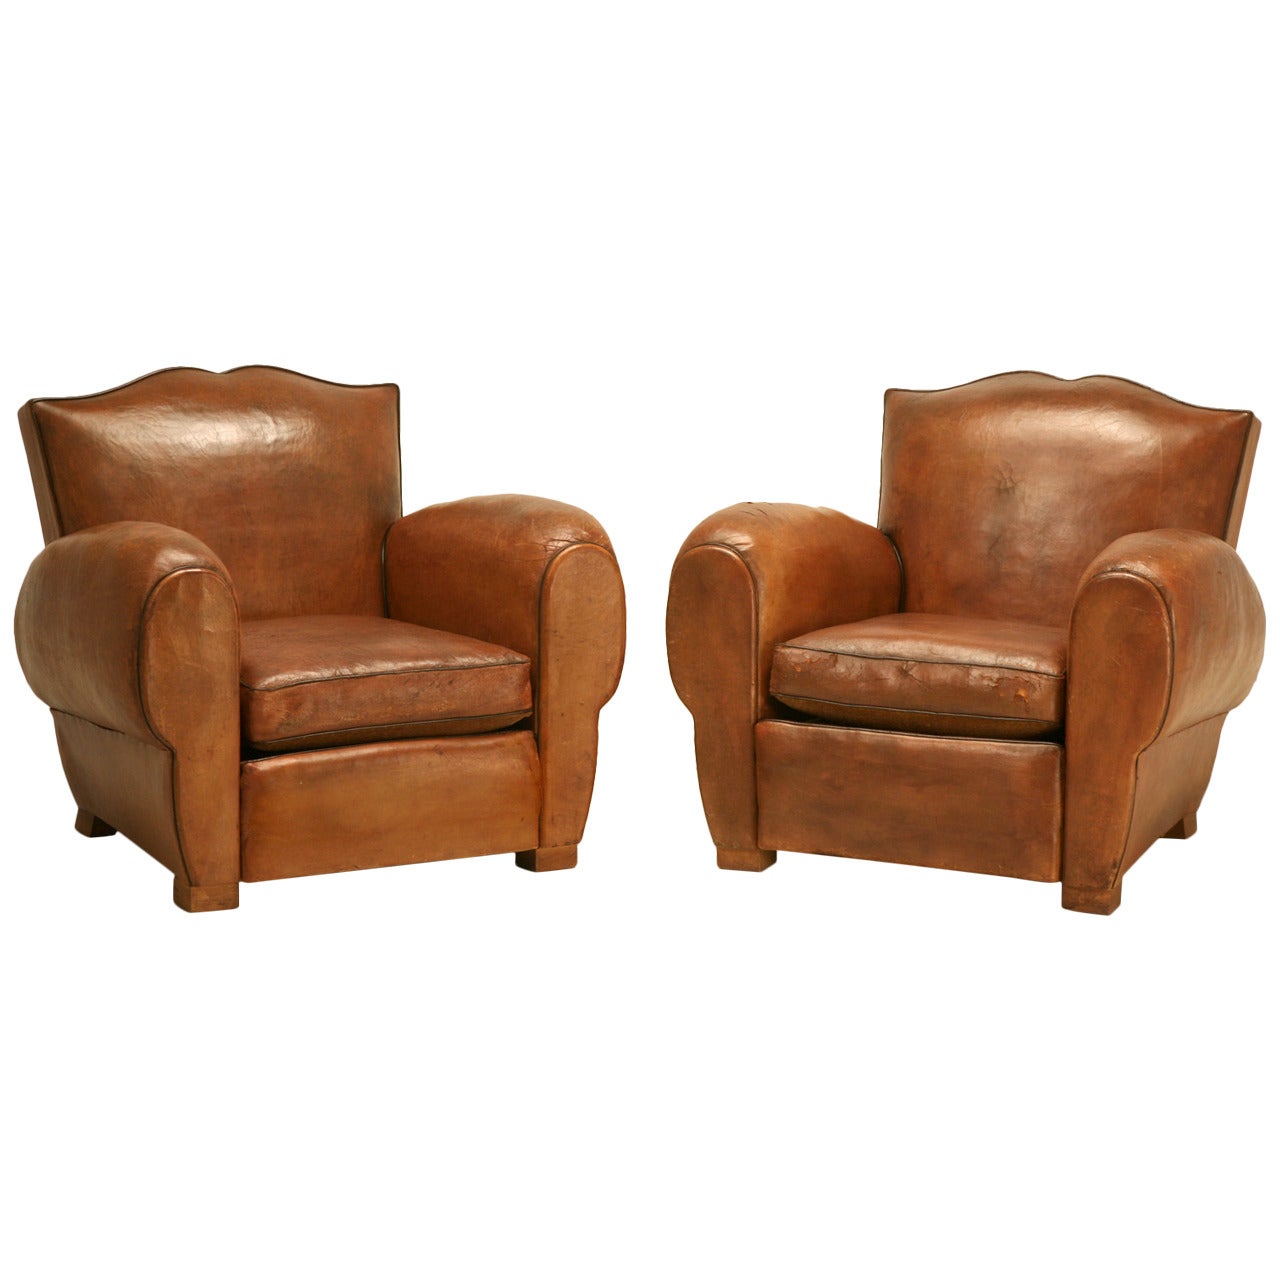 French Art Deco Original Leather Club Chairs, circa 1930s